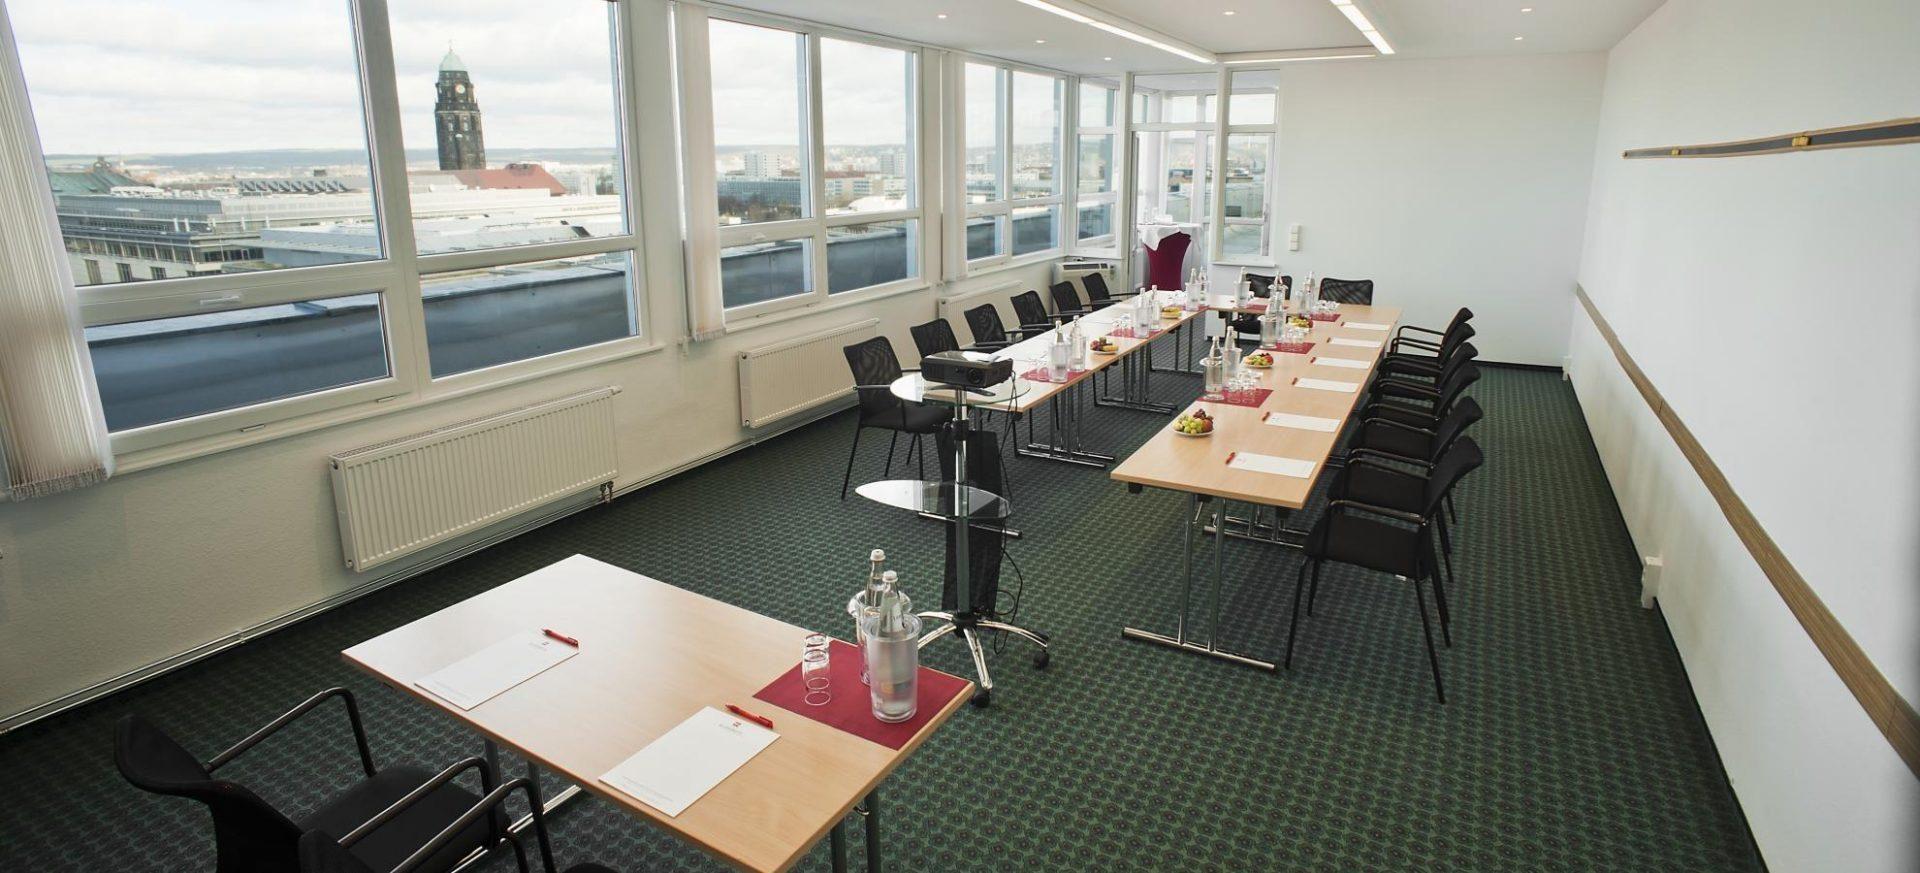 ibis-Hotels-Dresden-Tagungsraum-Meeting-room